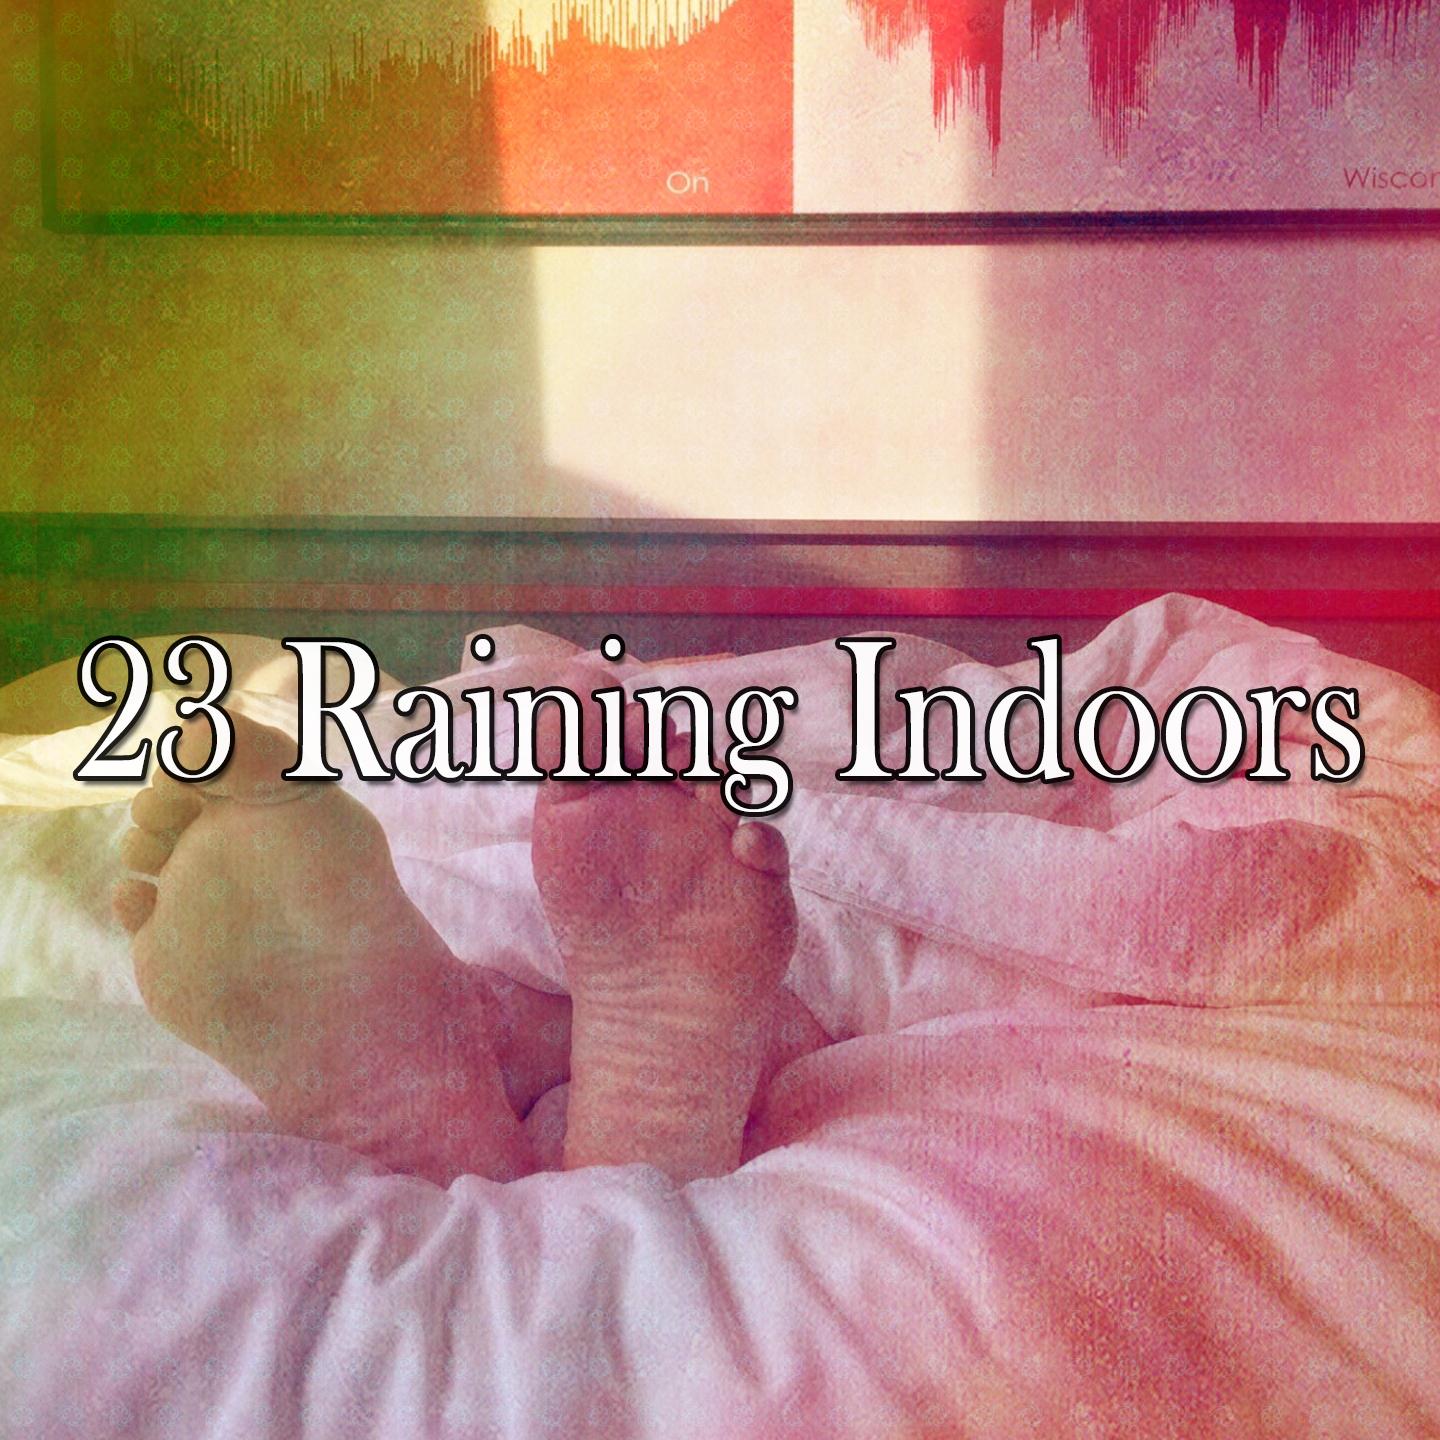 23 Raining Indoors